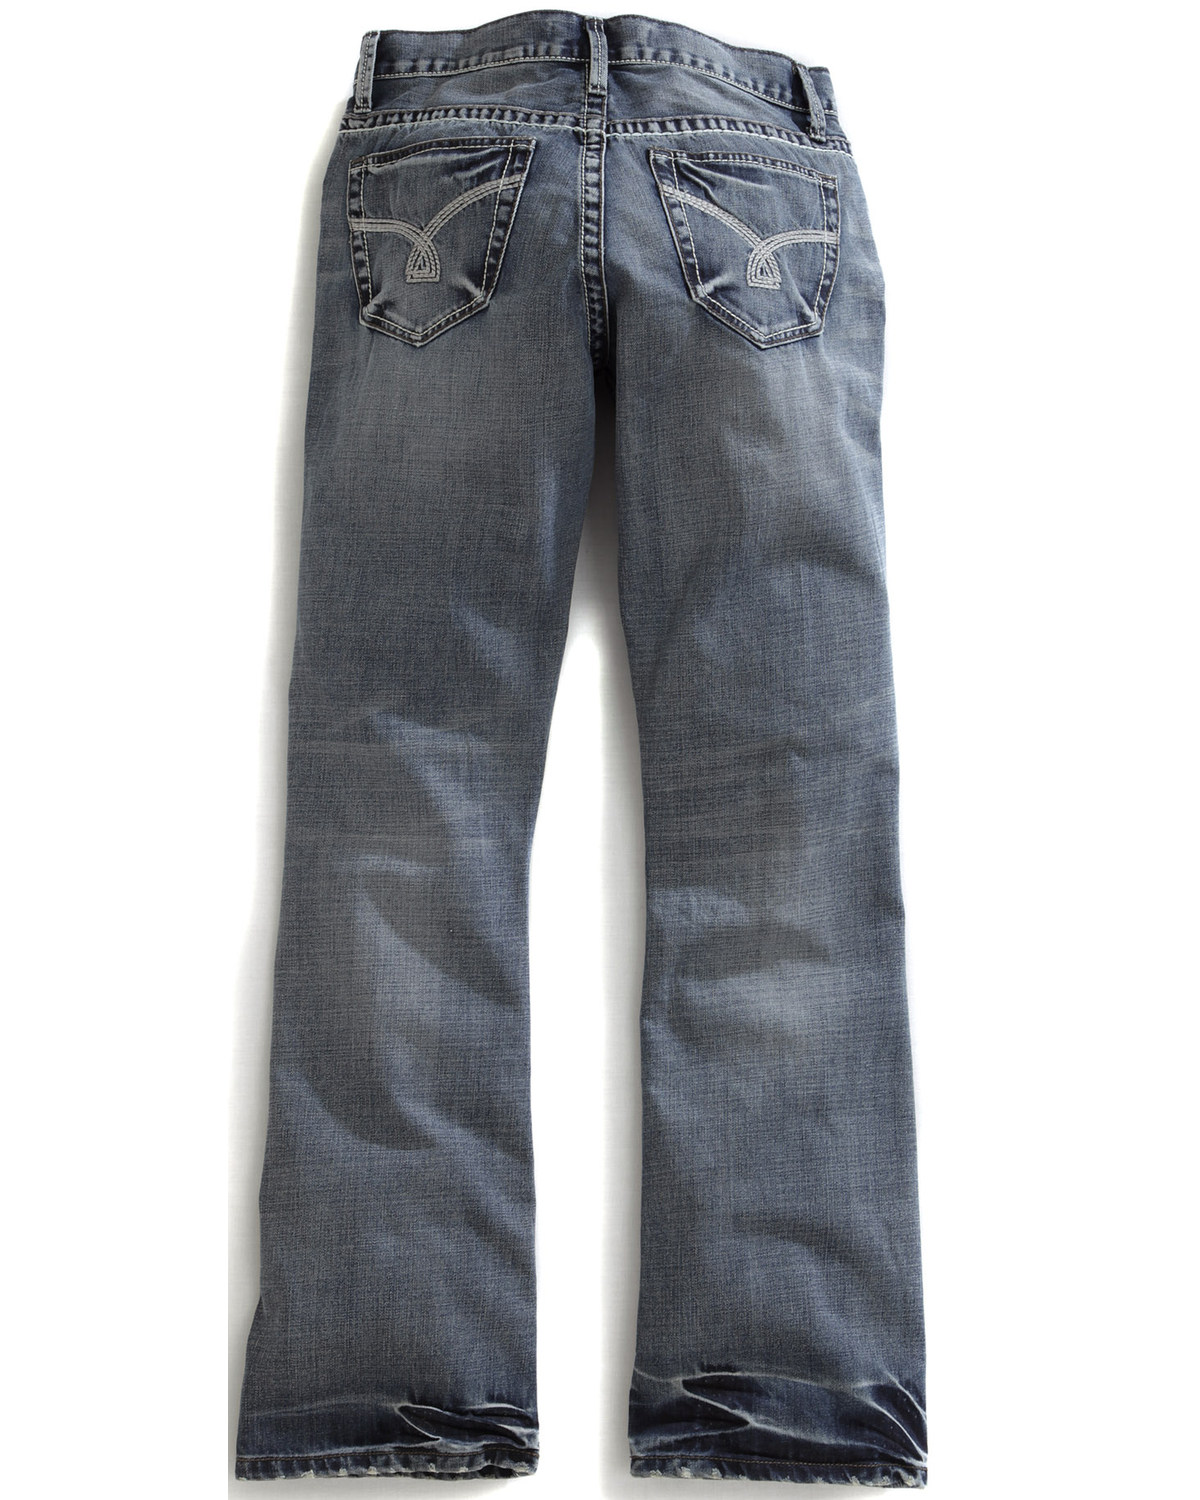 Tin Haul Men's Jagger Fit Triple Stitch Bootcut Jeans